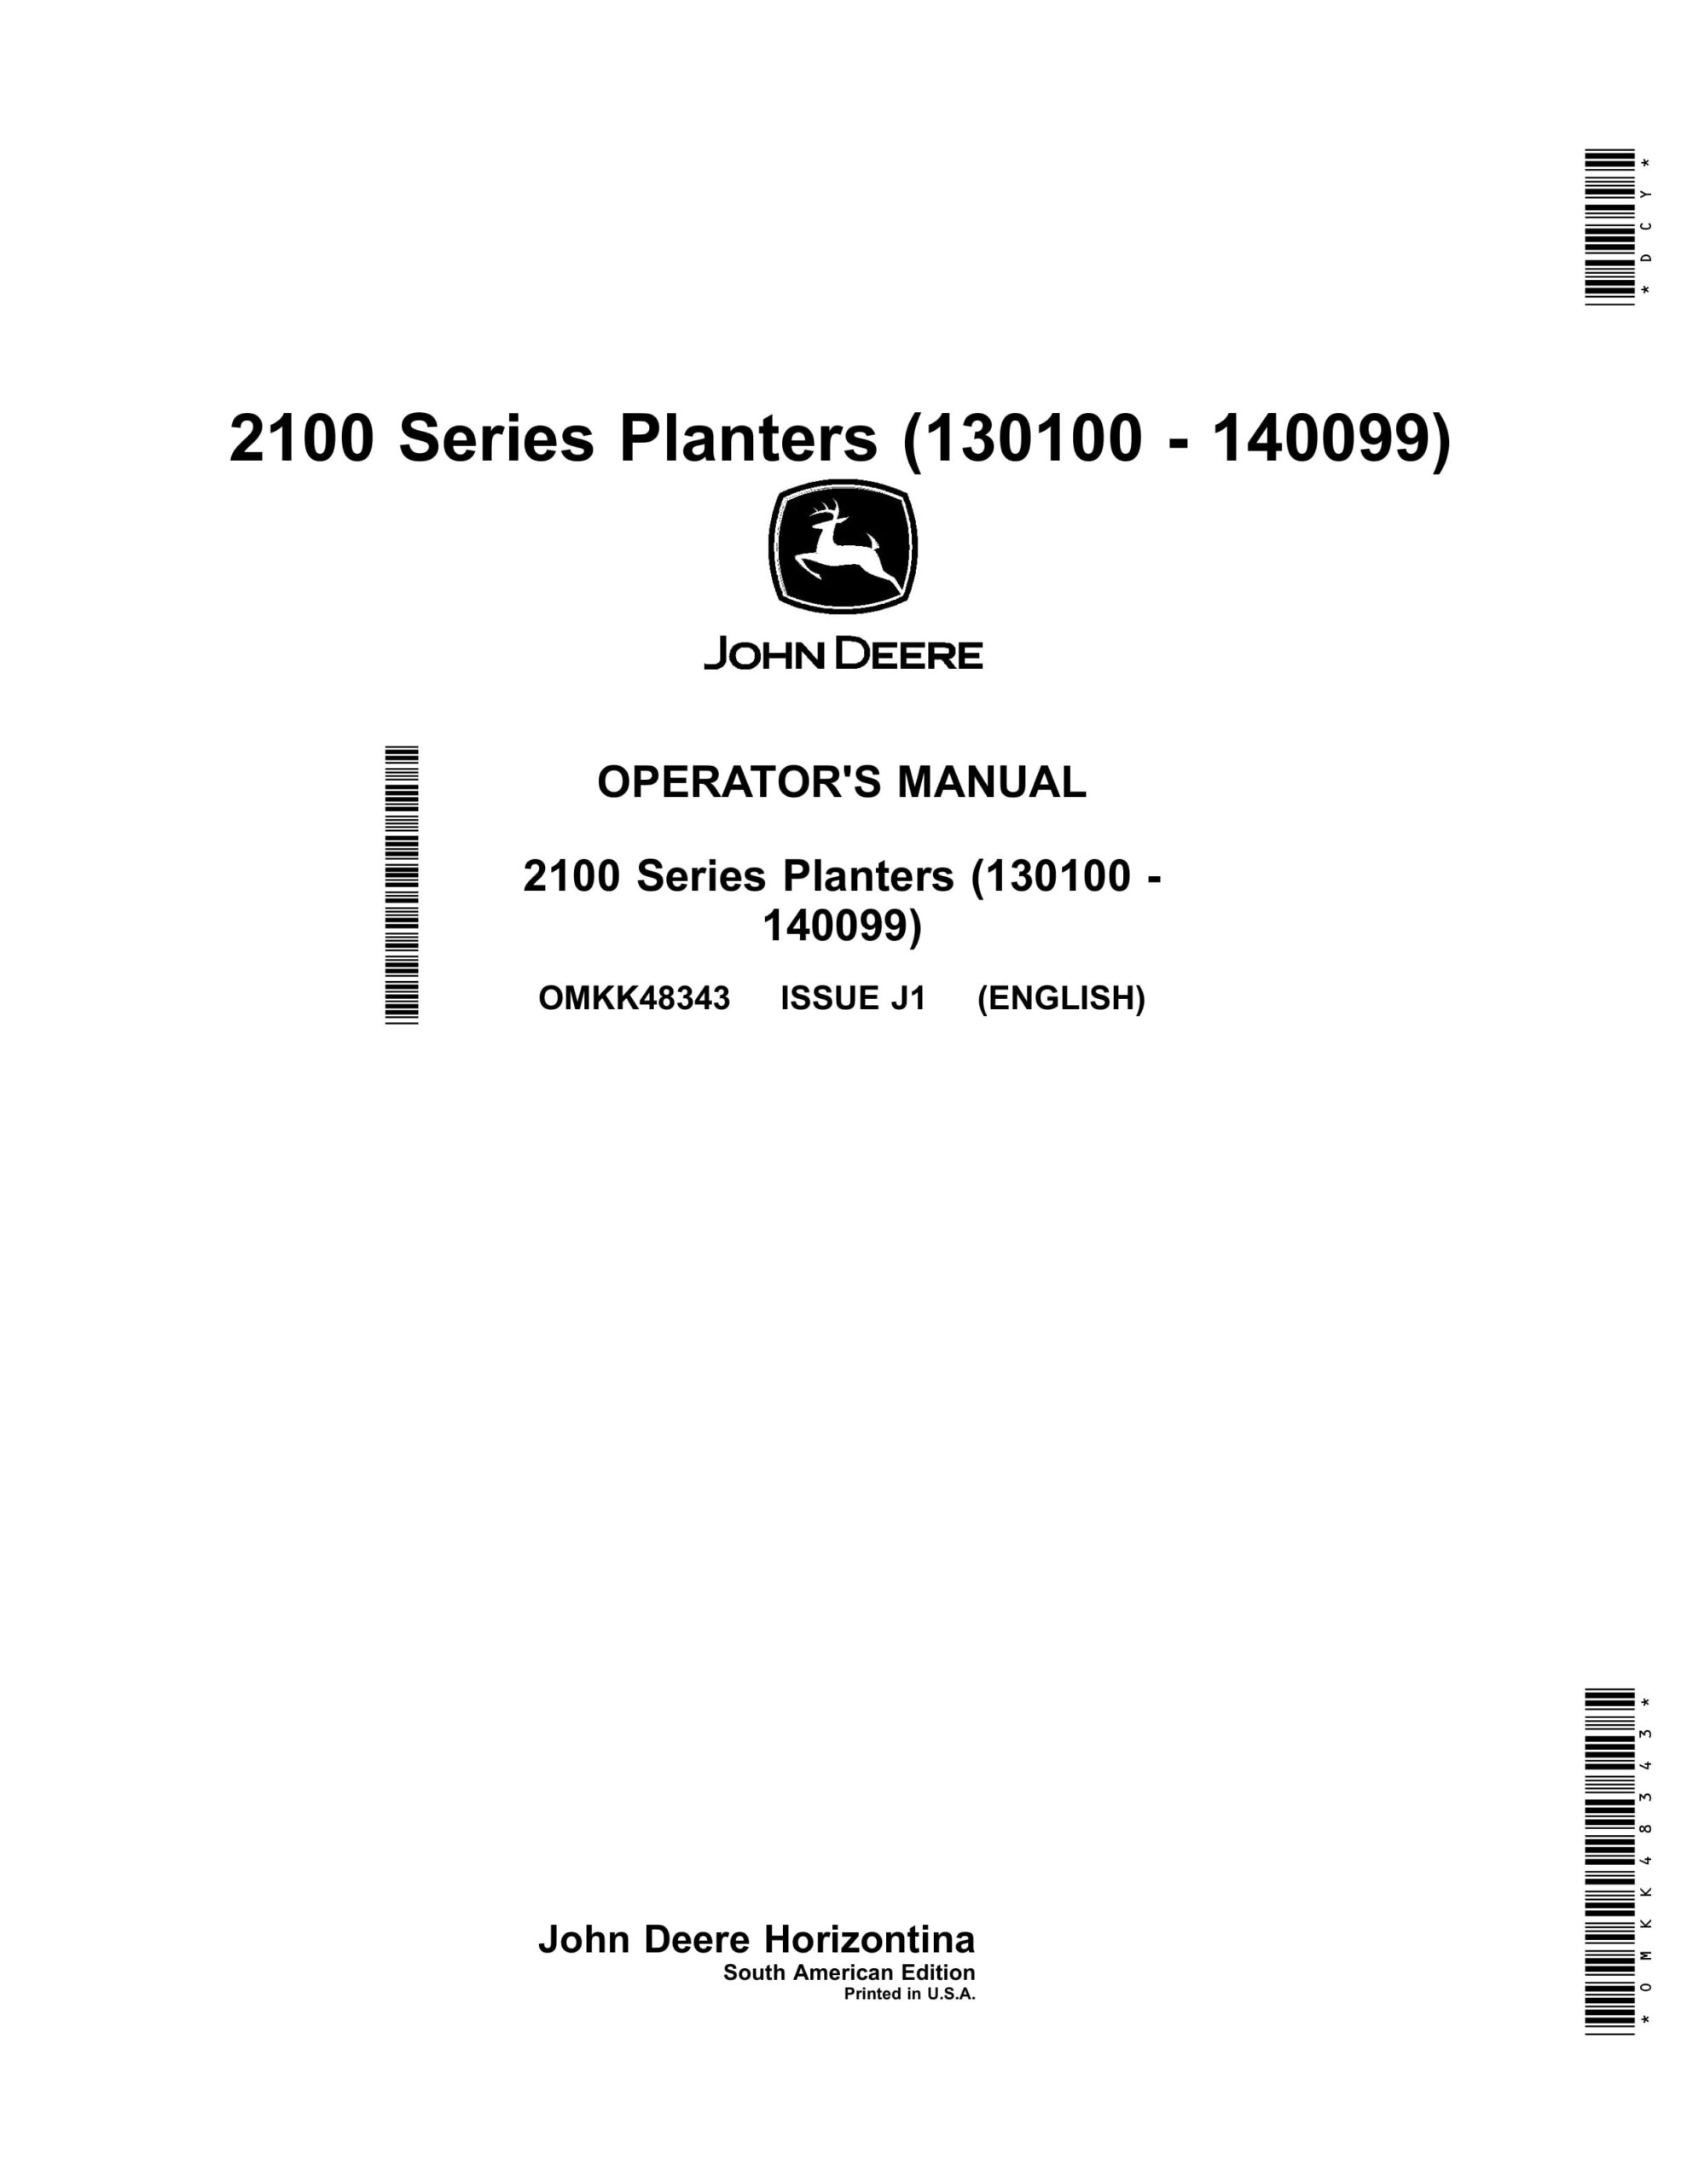 John Deere 2100 Series Planter Operator Manual OMKK48343-1